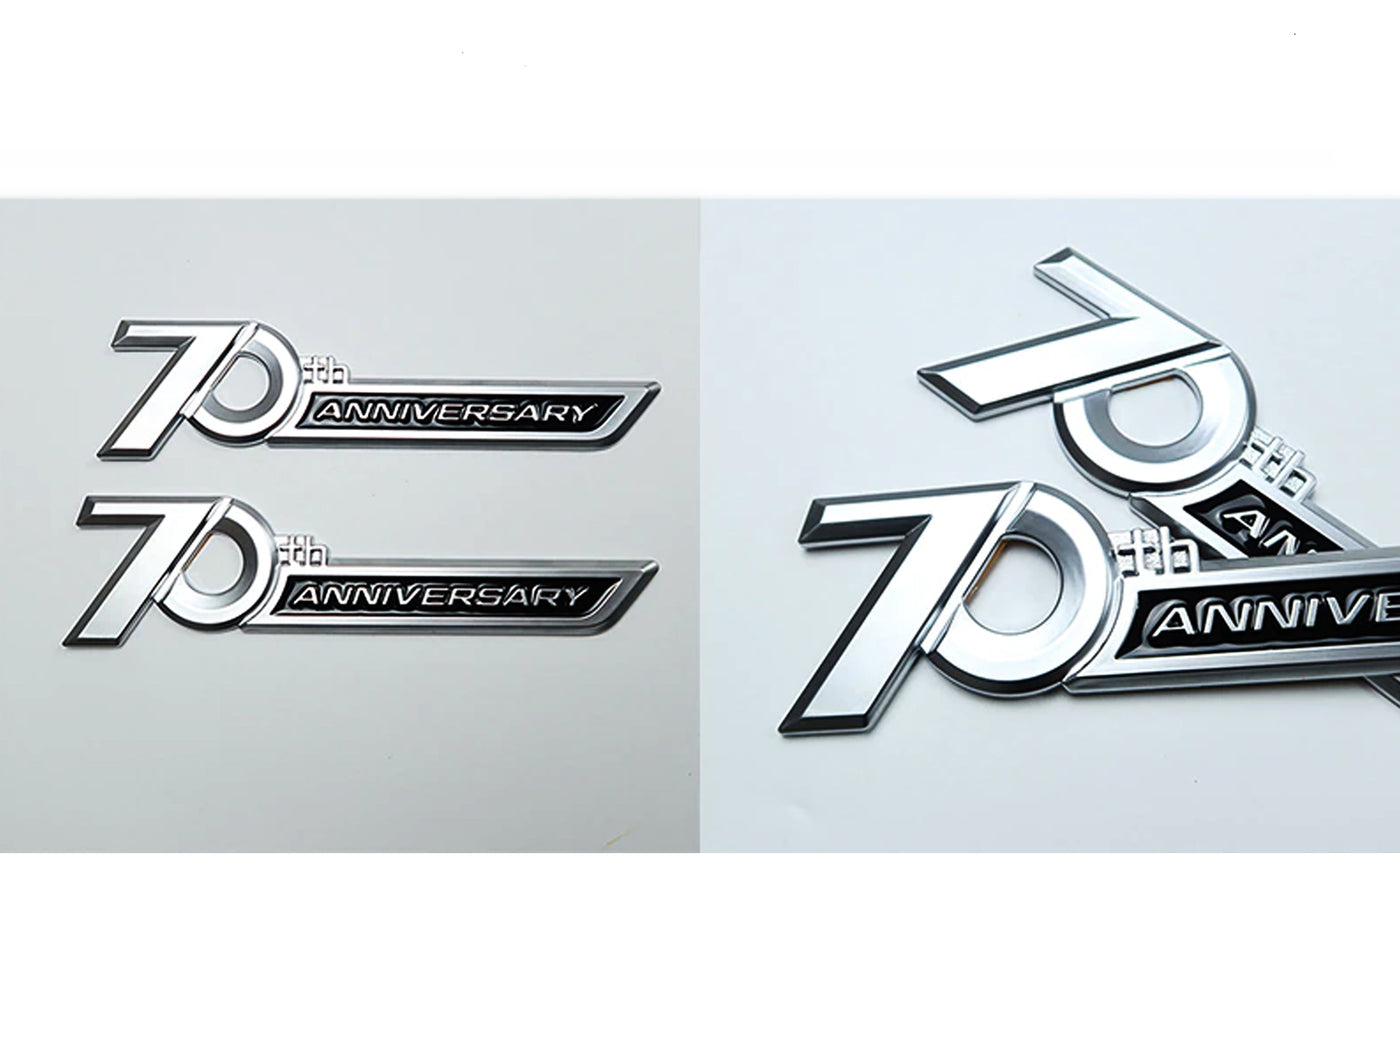 Emblema o Logo de 70th Anniversary para Toyota Land Cruiser, Lc300, Lc200 y Prado